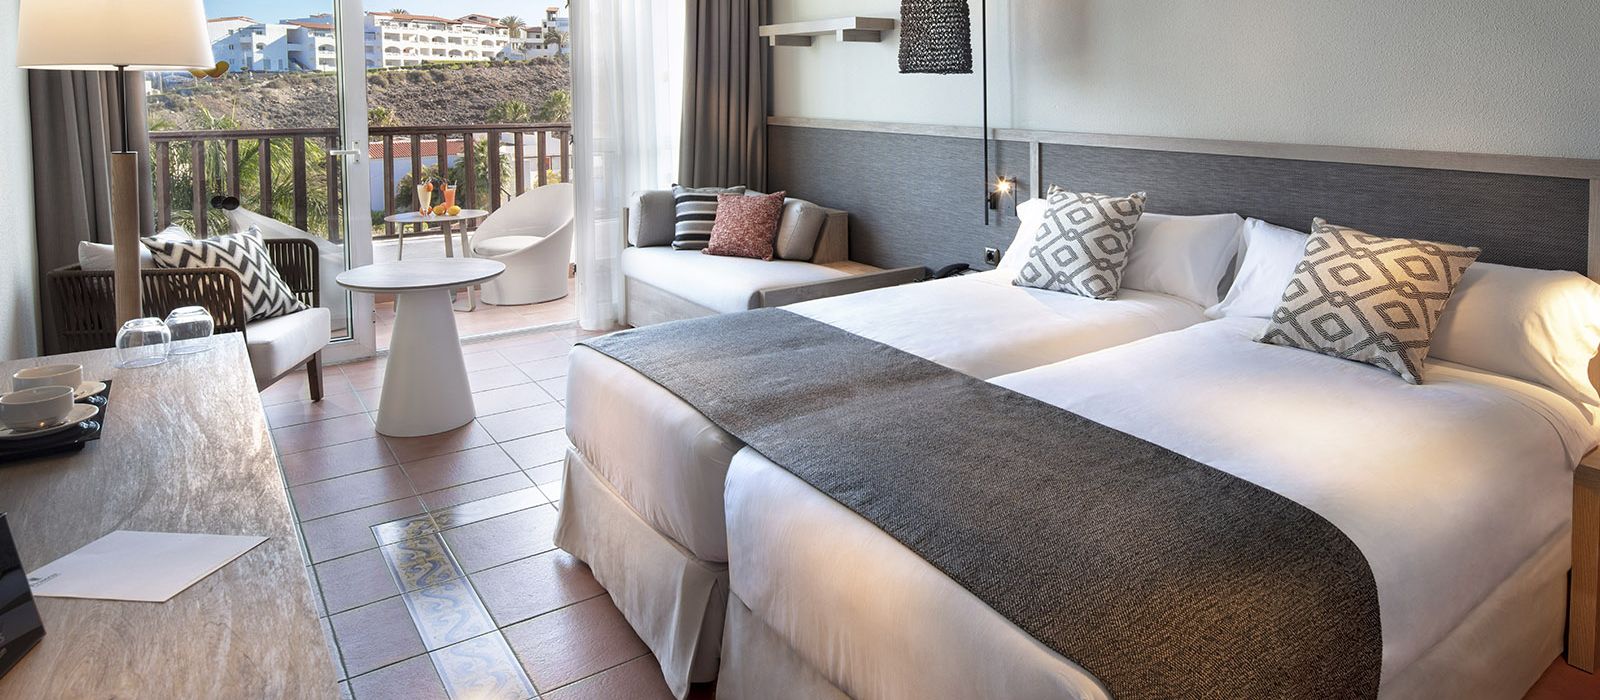 Images Hotel Fuerteventura Princess****